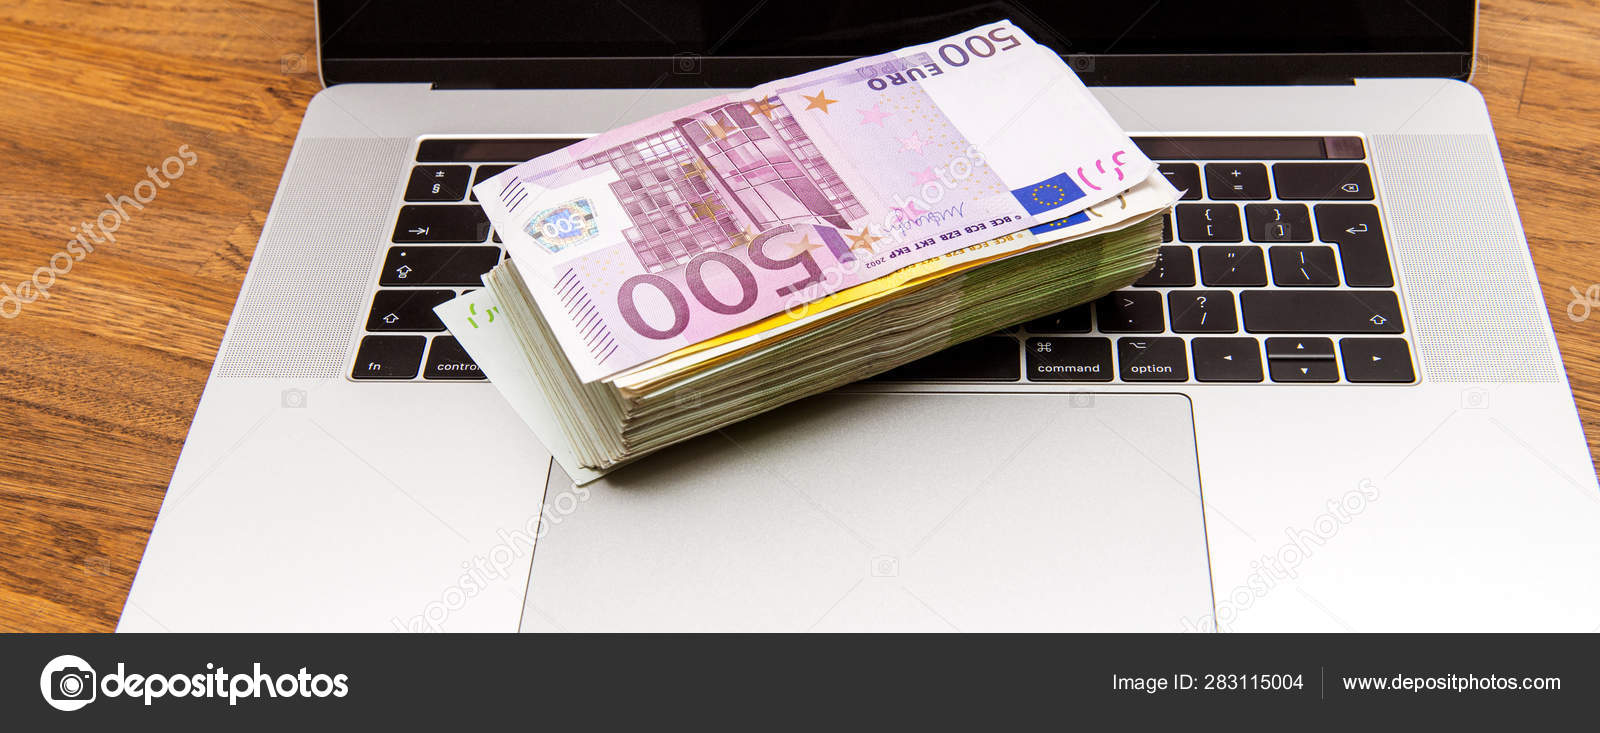 Dosering kennisgeving beweeglijkheid Stack pile of 500 100 200 Euro bank currency laptop Stock Photo by  ©ifeelstock 283115004